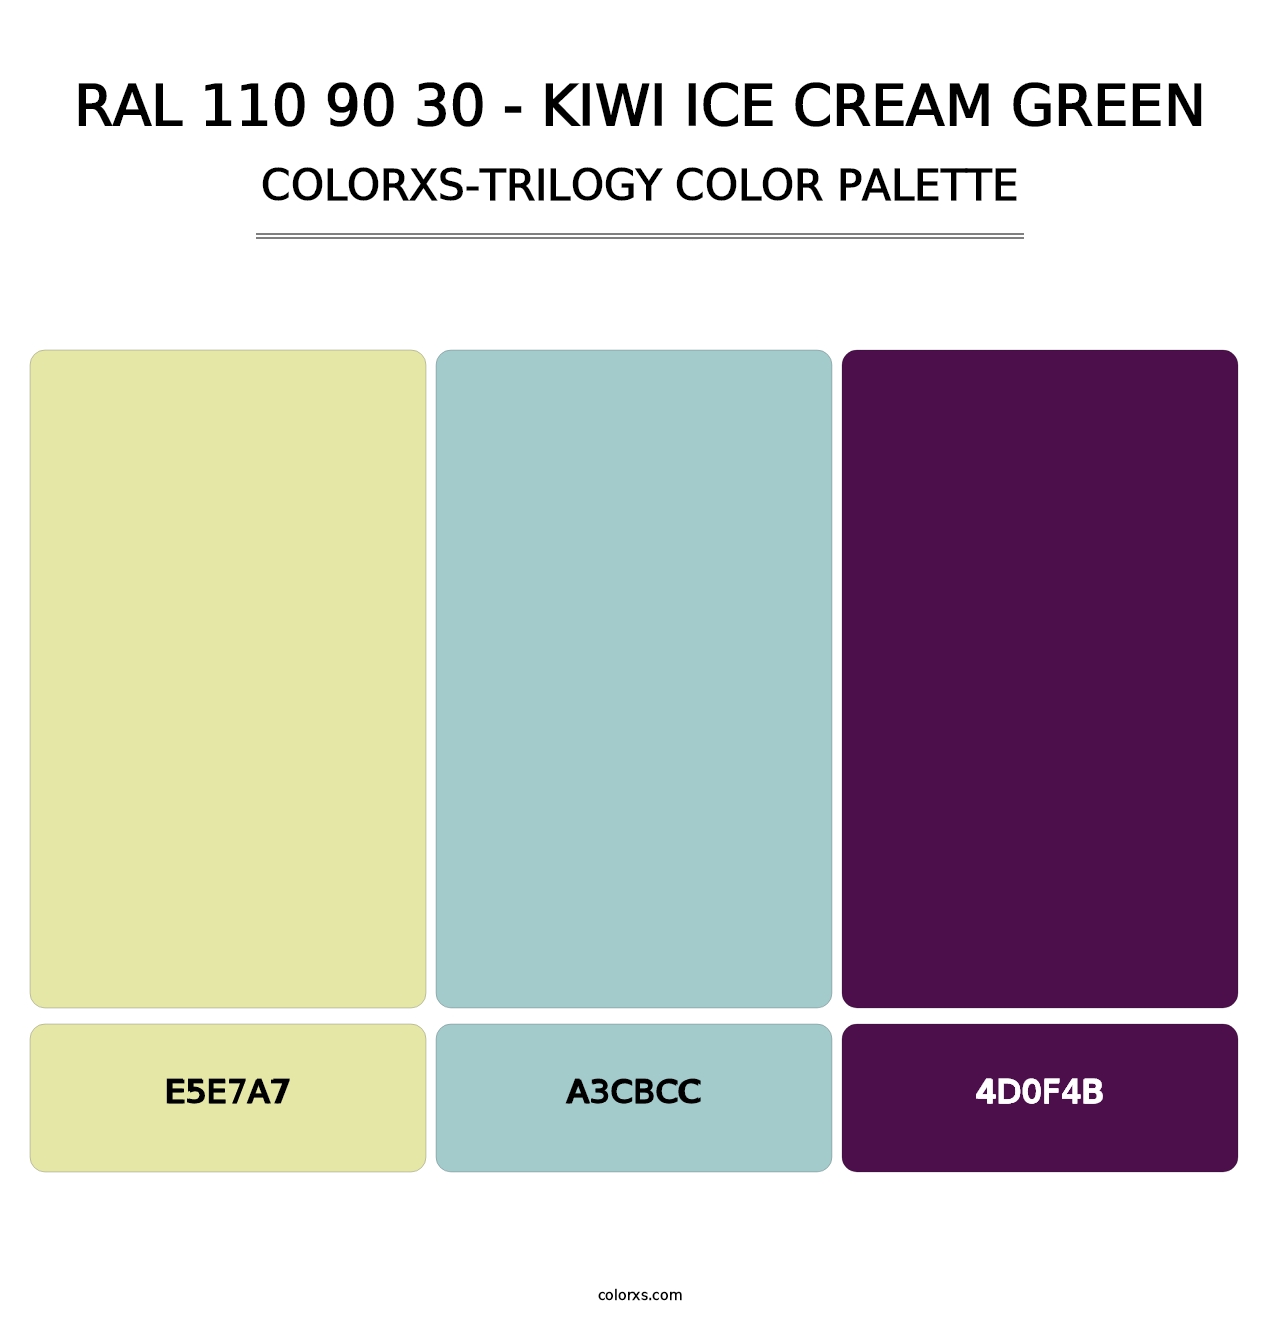 RAL 110 90 30 - Kiwi Ice Cream Green - Colorxs Trilogy Palette